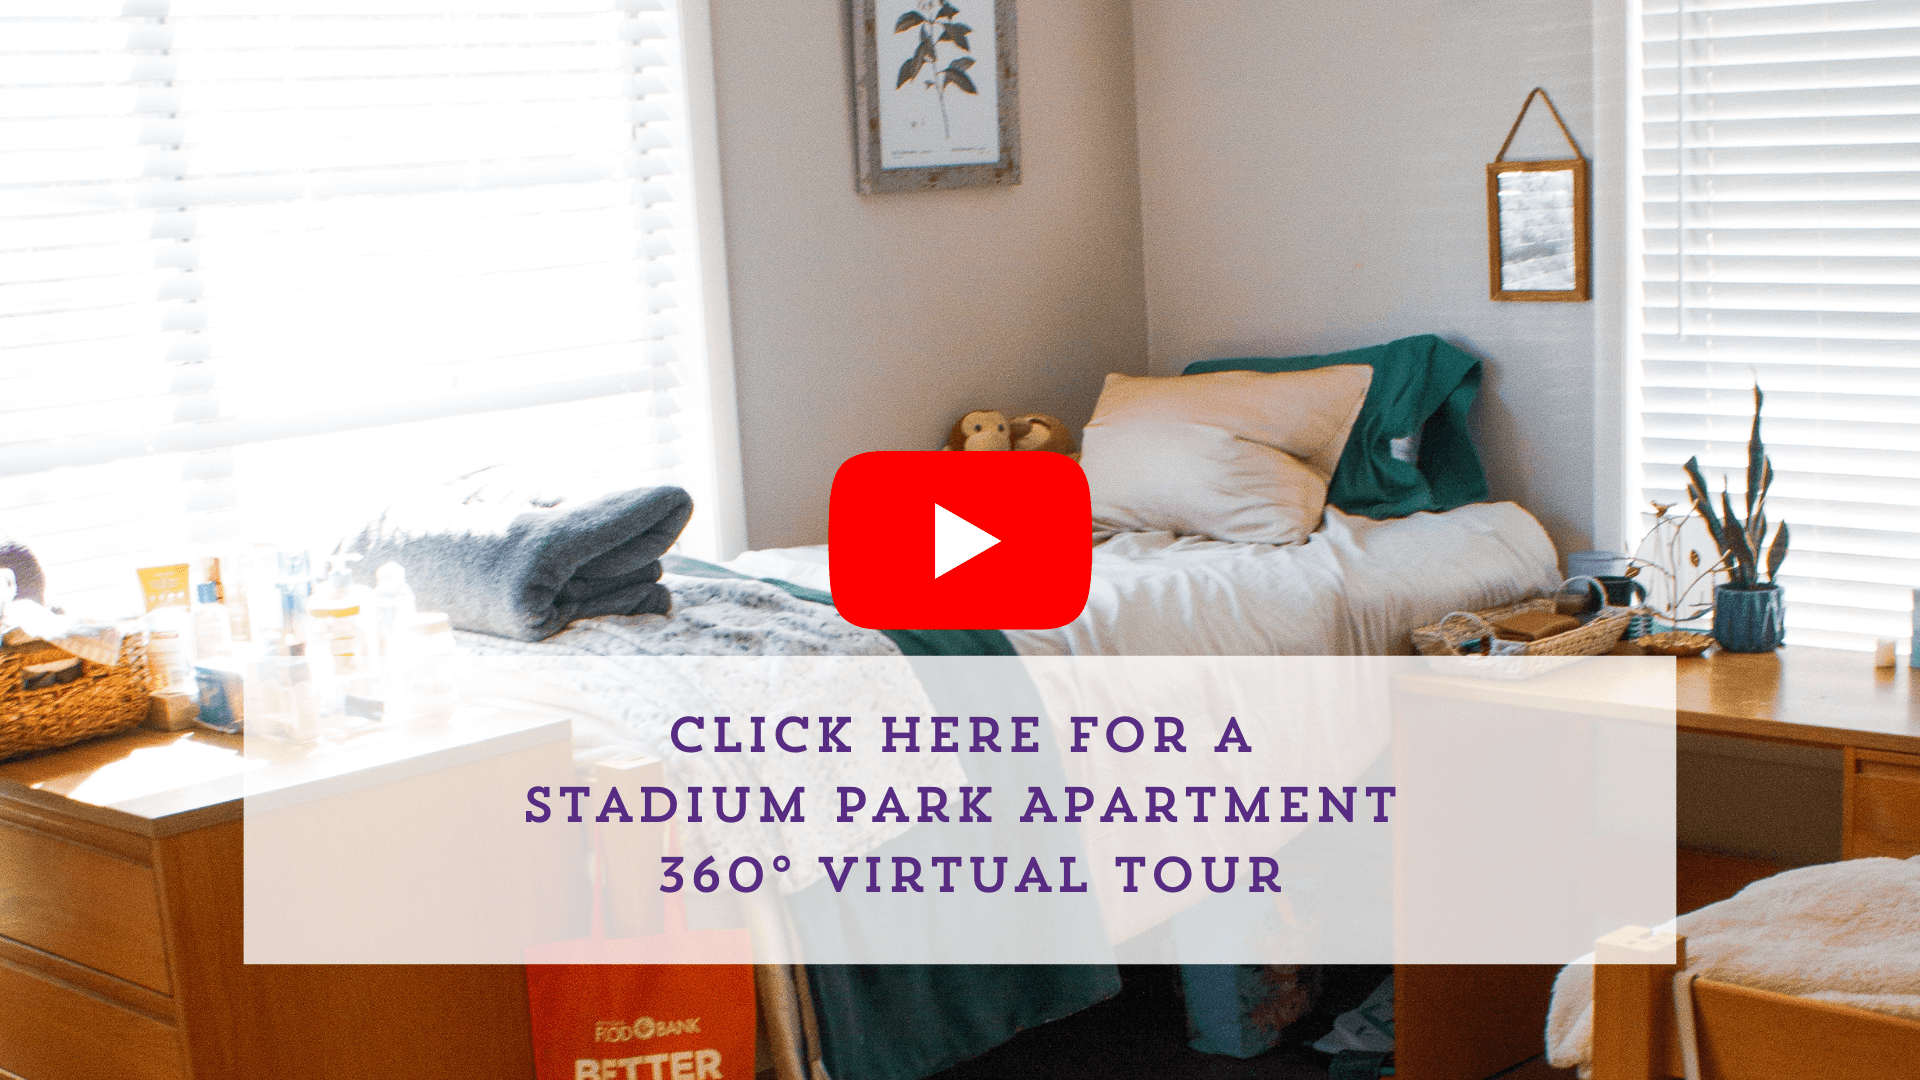 alt text: click here for a stadium park apartment 360 degree virtual tour